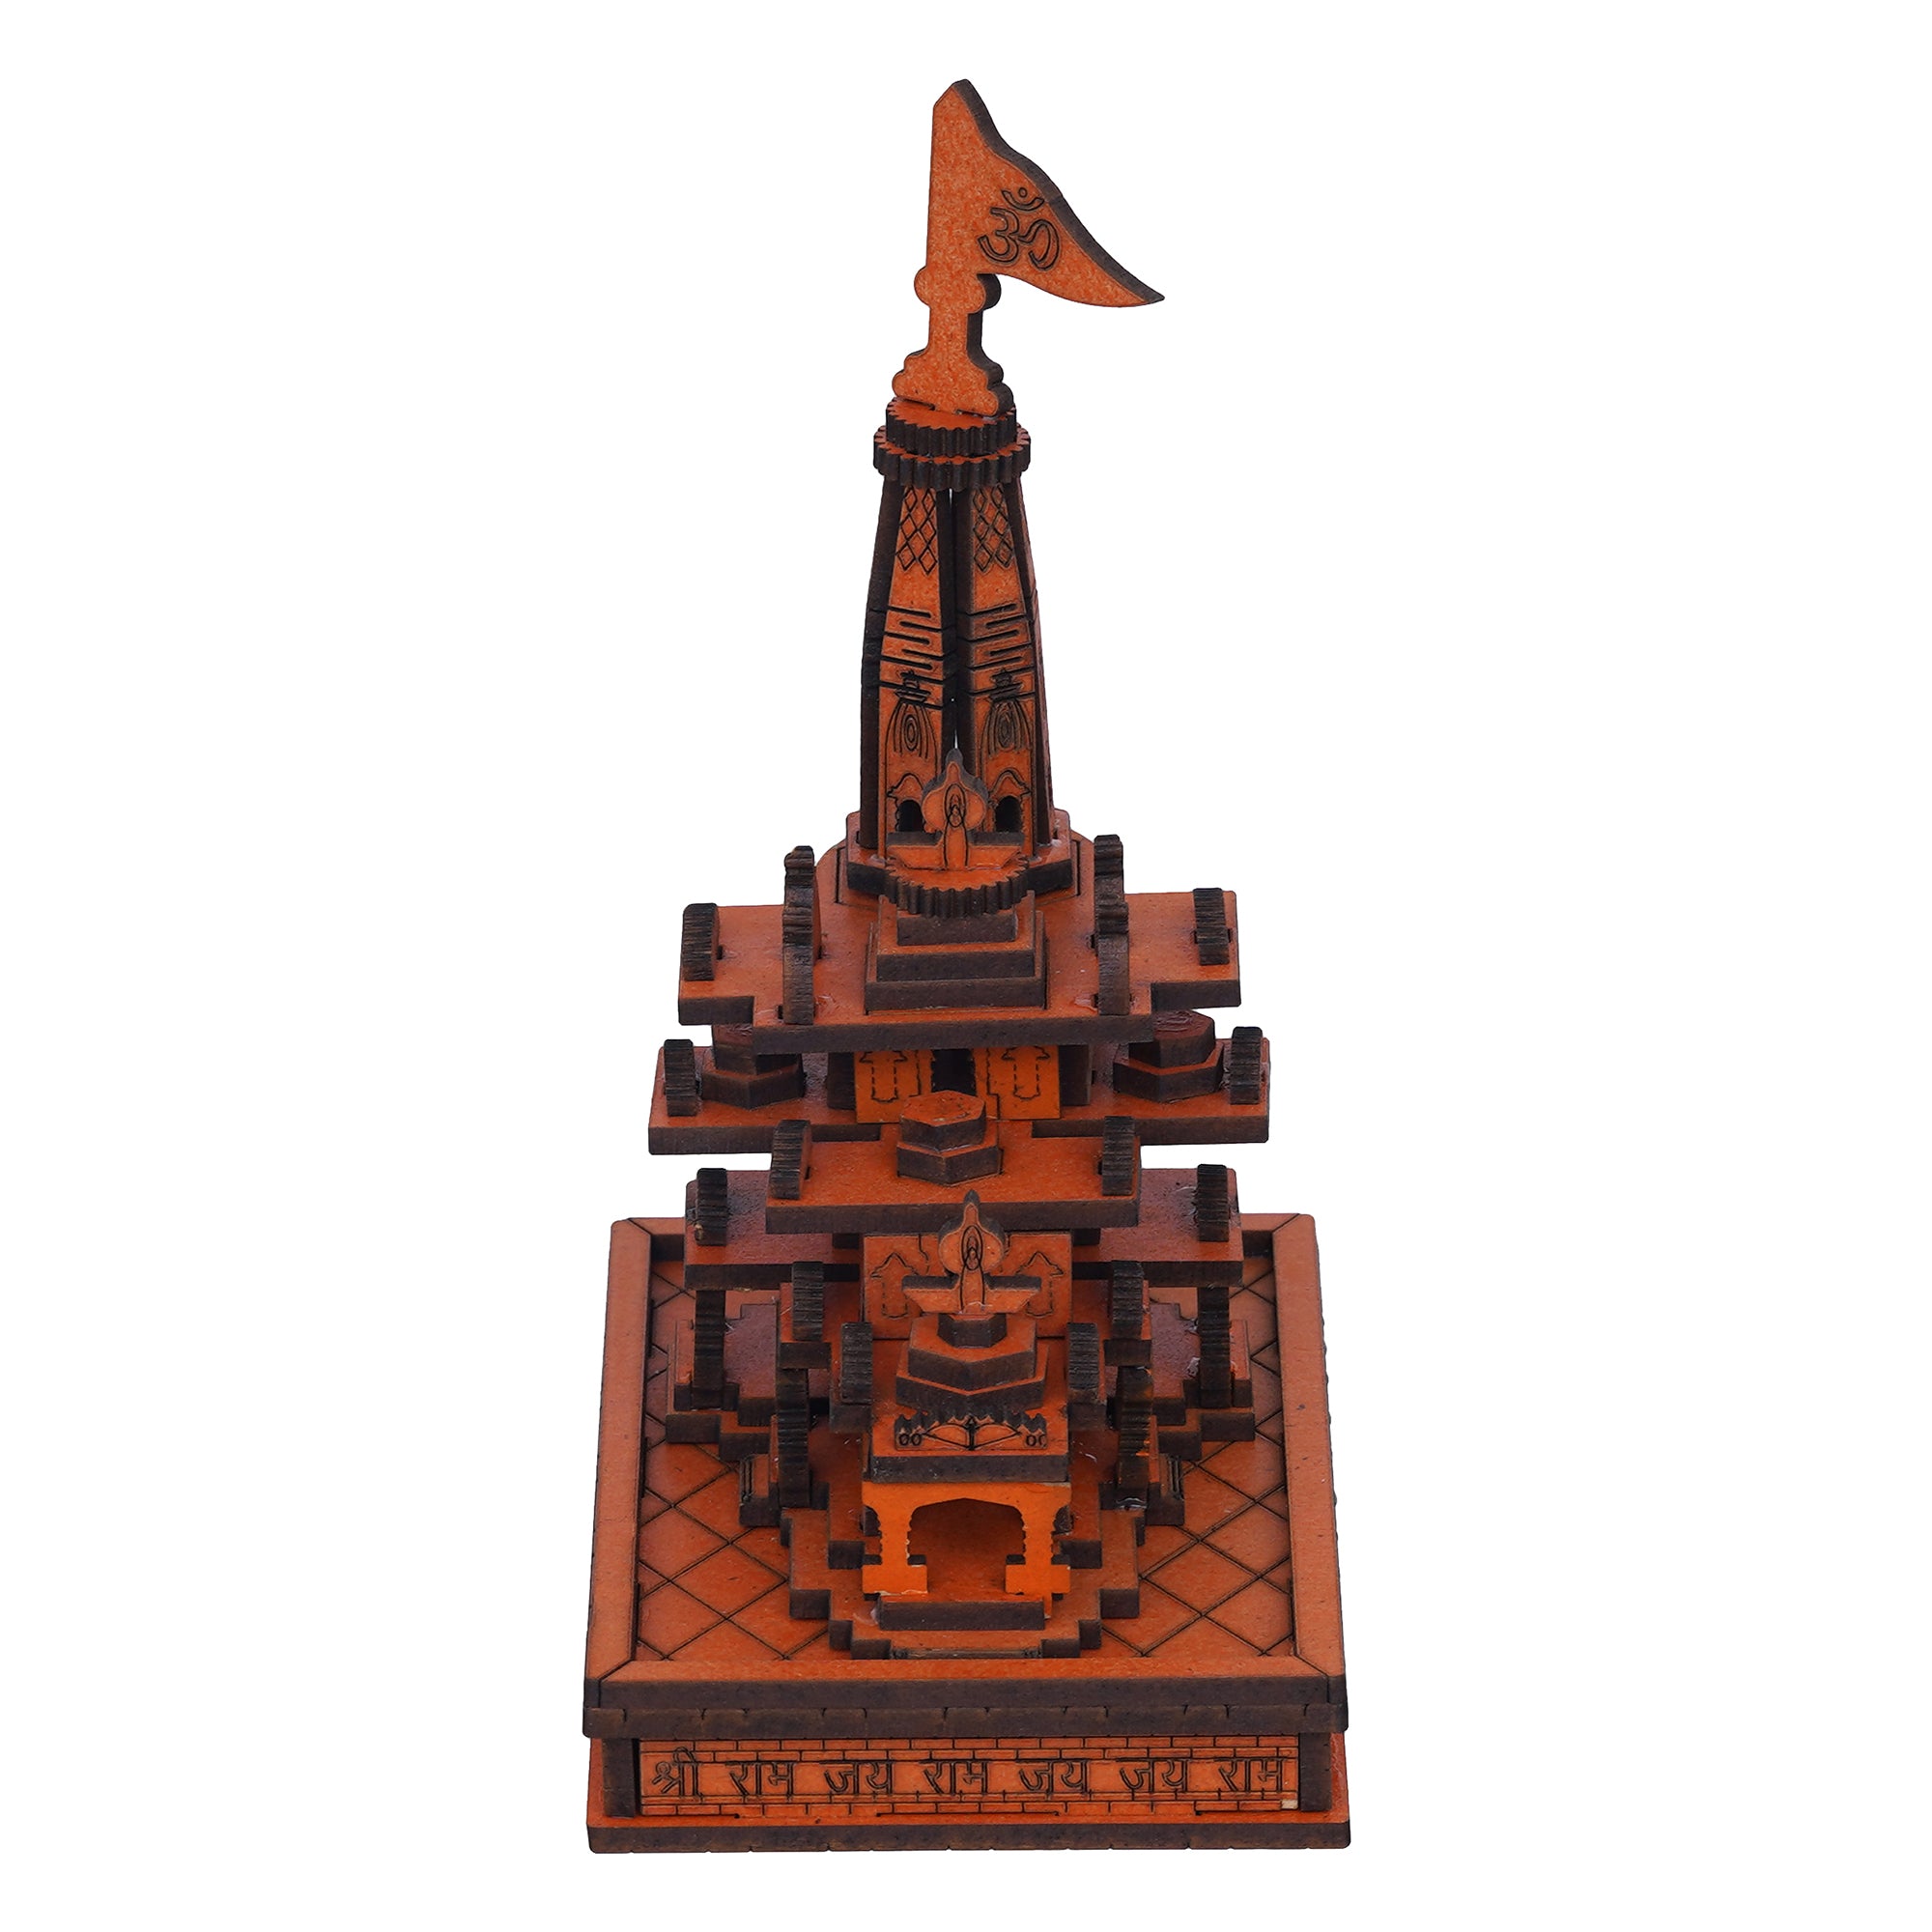 eCraftIndia Shri Ram Mandir Ayodhya Model - Wooden MDF Craftsmanship Authentic Designer Temple - Ideal for Home Temple, Decor, and Spiritual Gifting (Orange, Brown) 7